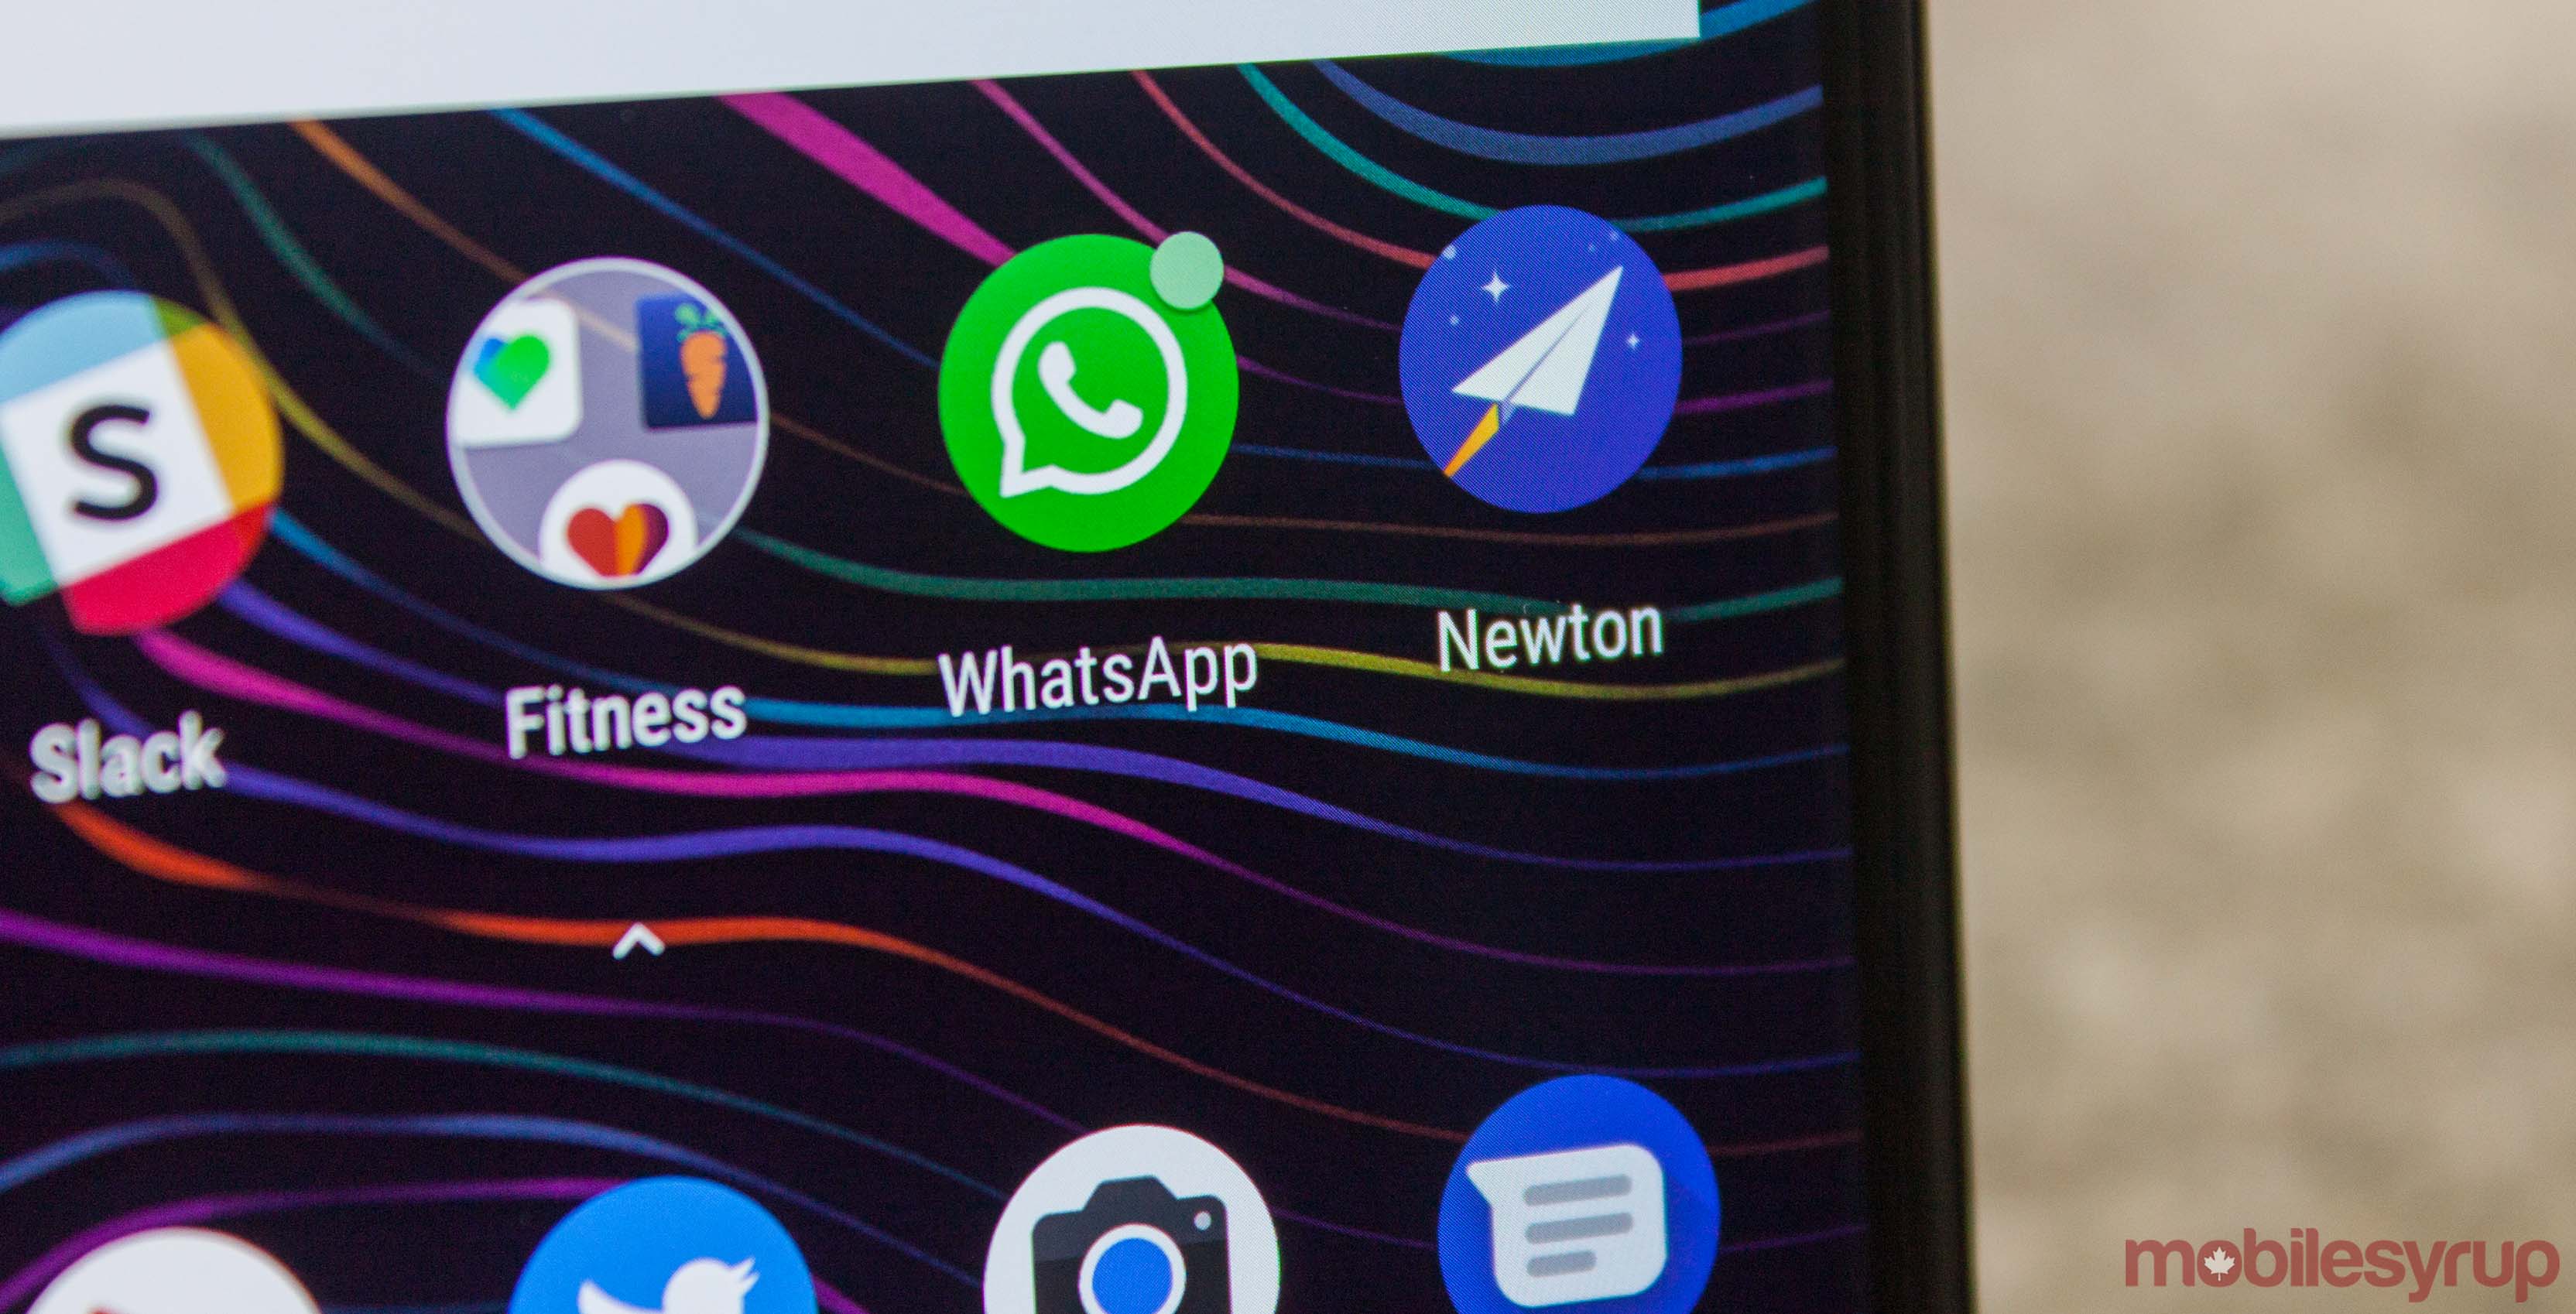 Newton app icon on Android